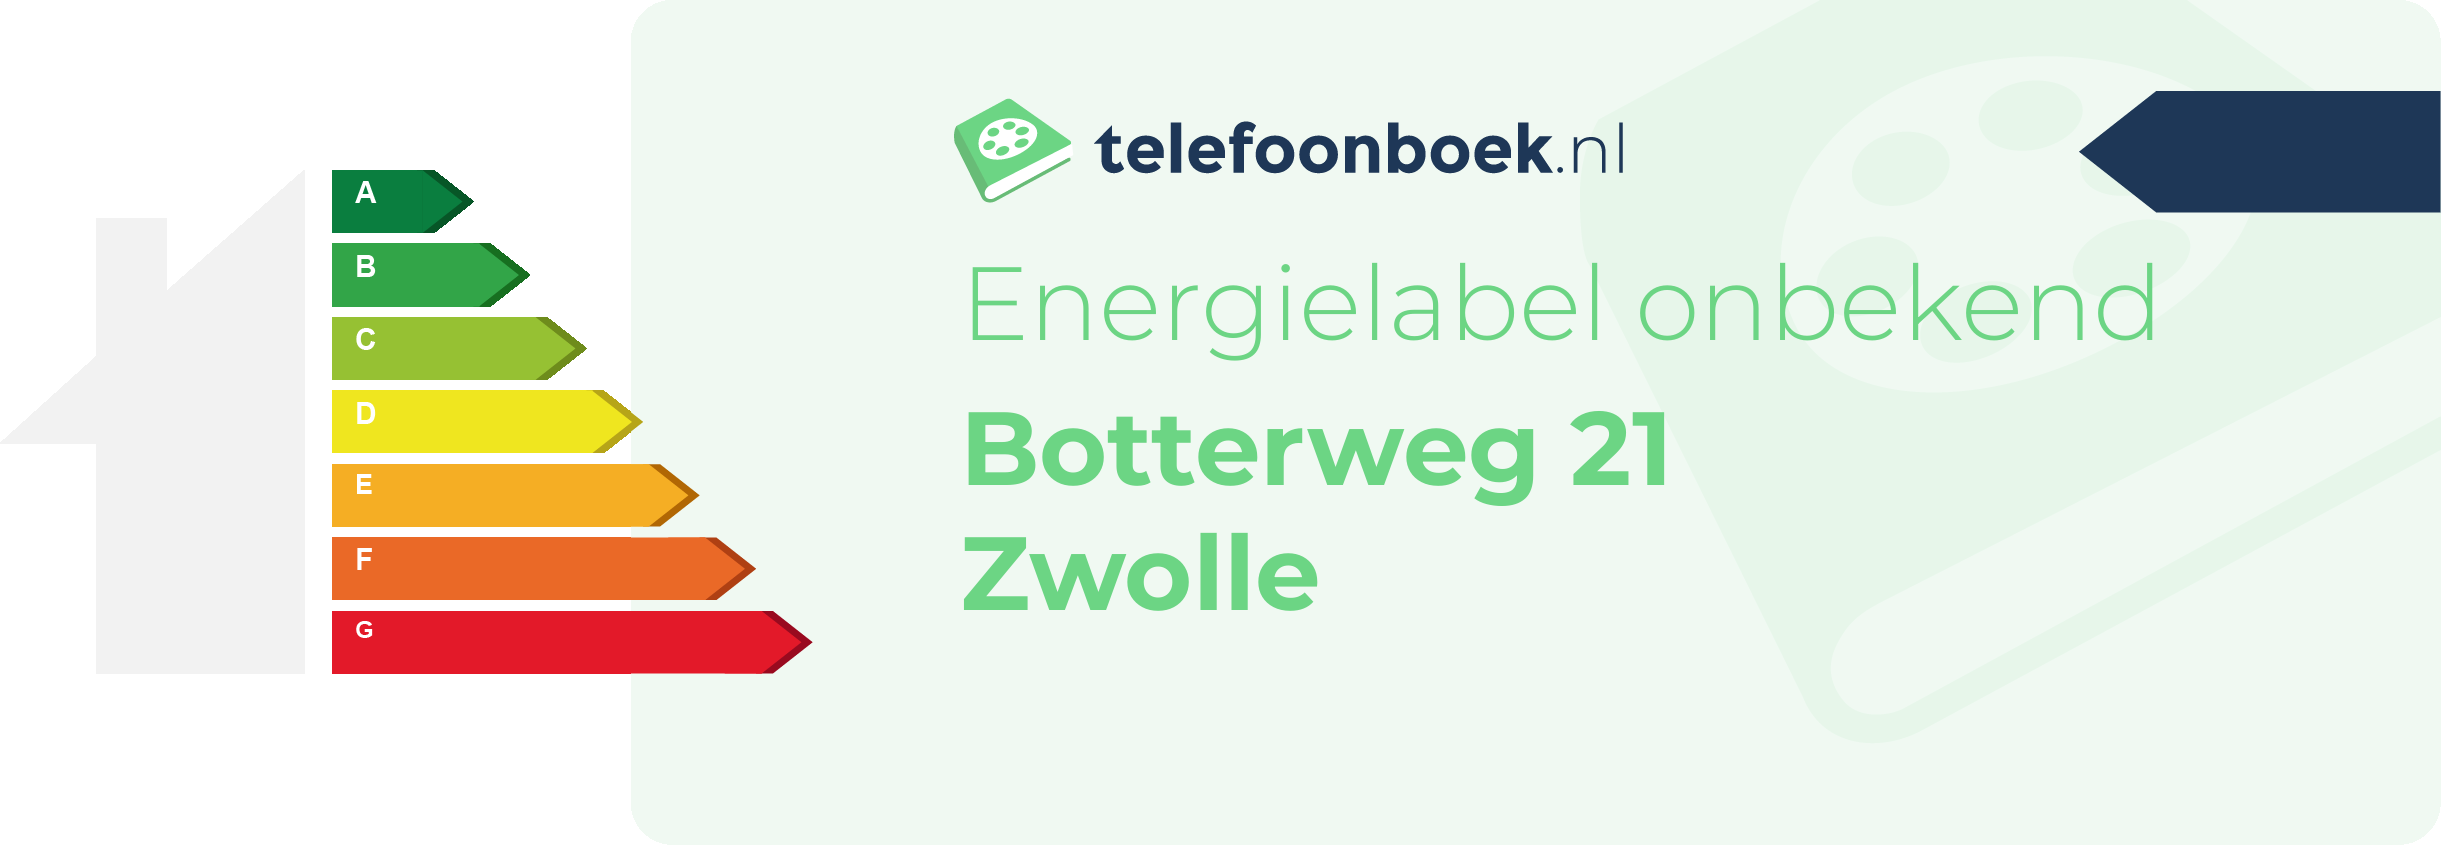 Energielabel Botterweg 21 Zwolle